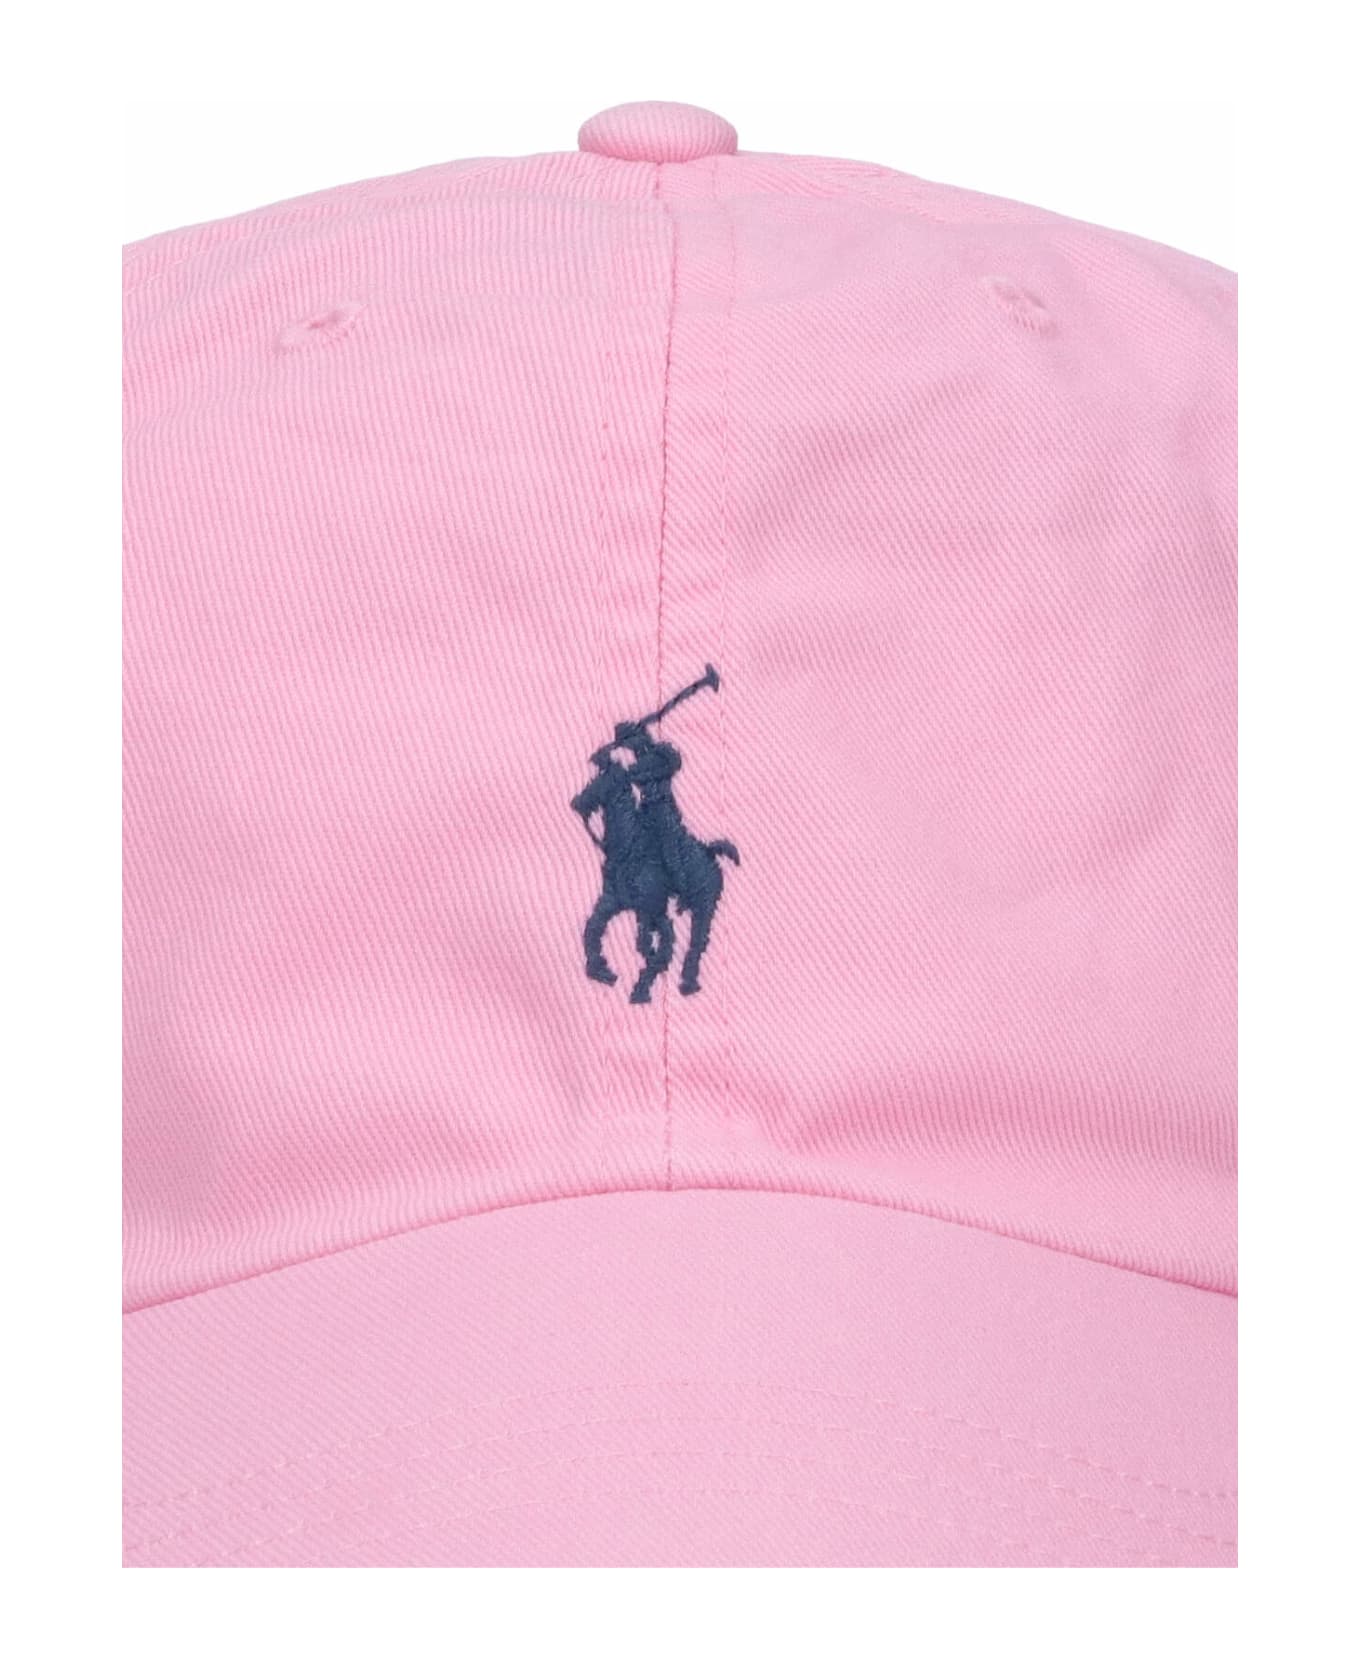 Polo Ralph Lauren Logo Baseball Cap - Pink 帽子